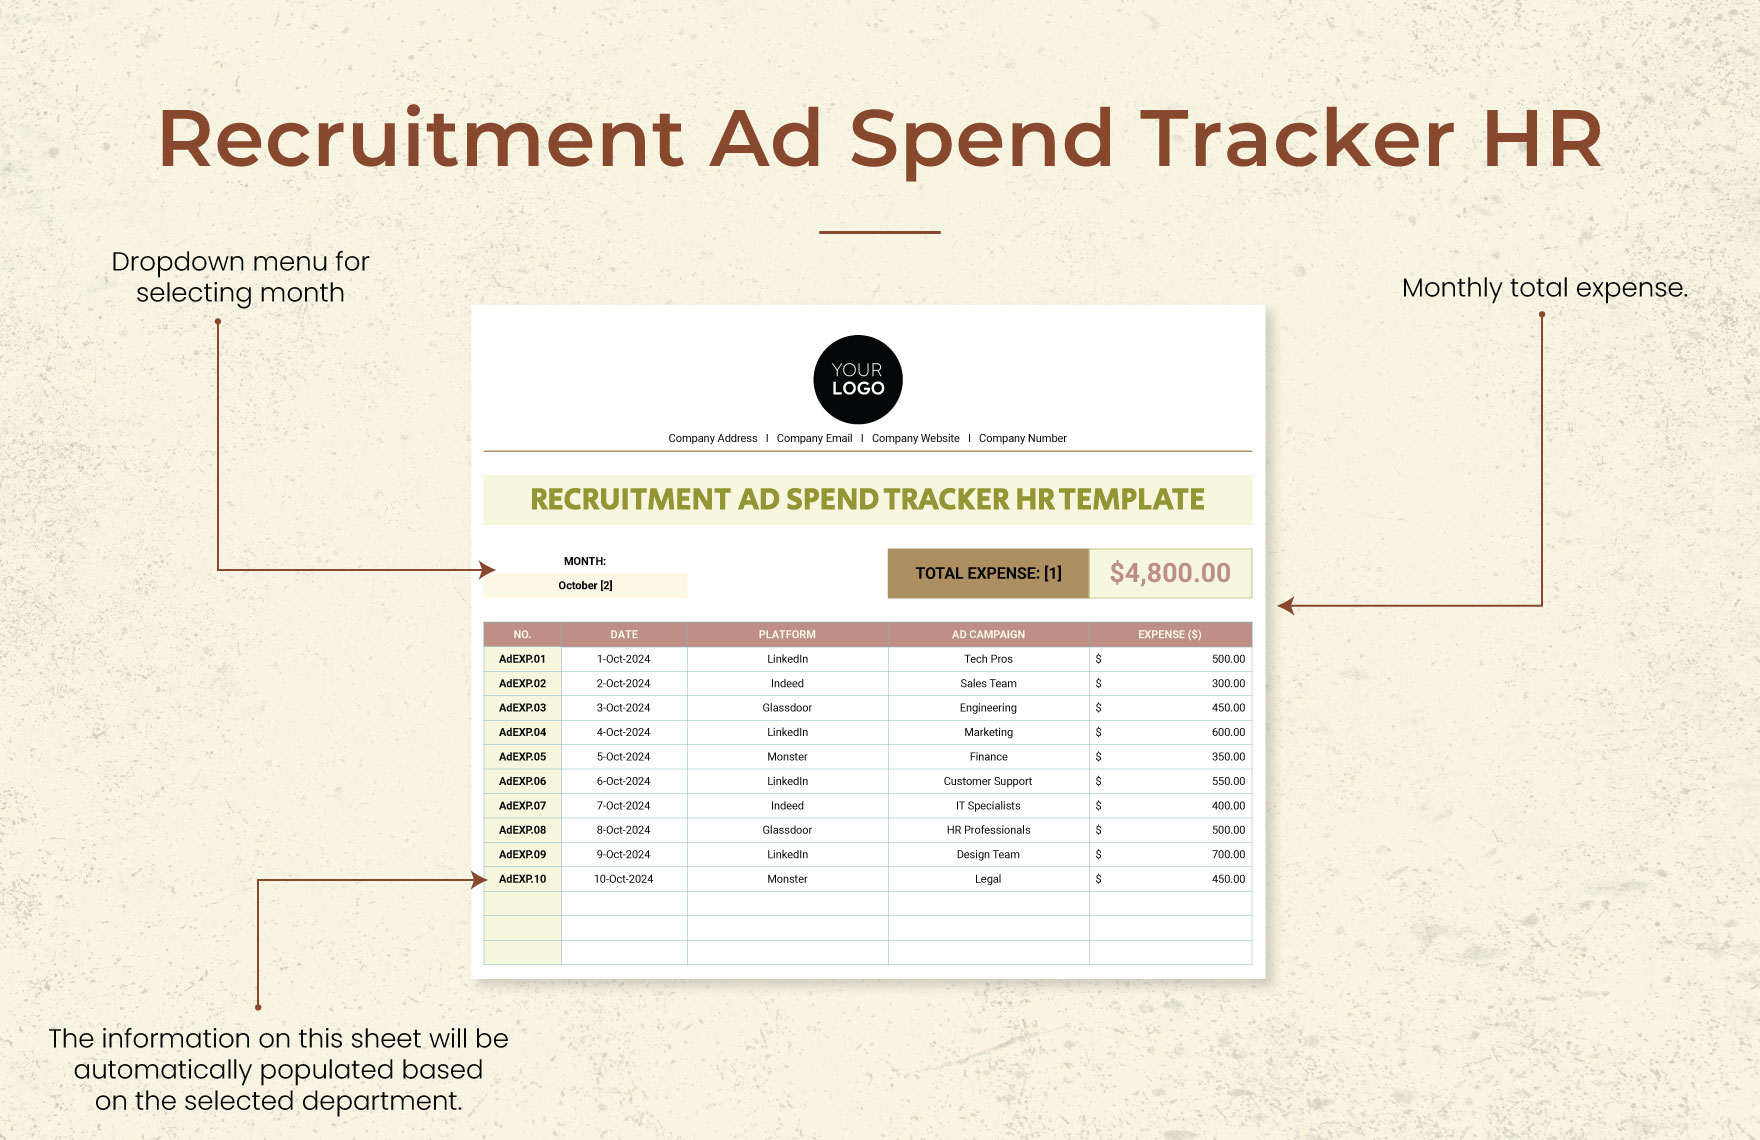 Recruitment Ad Spend Tracker HR Template